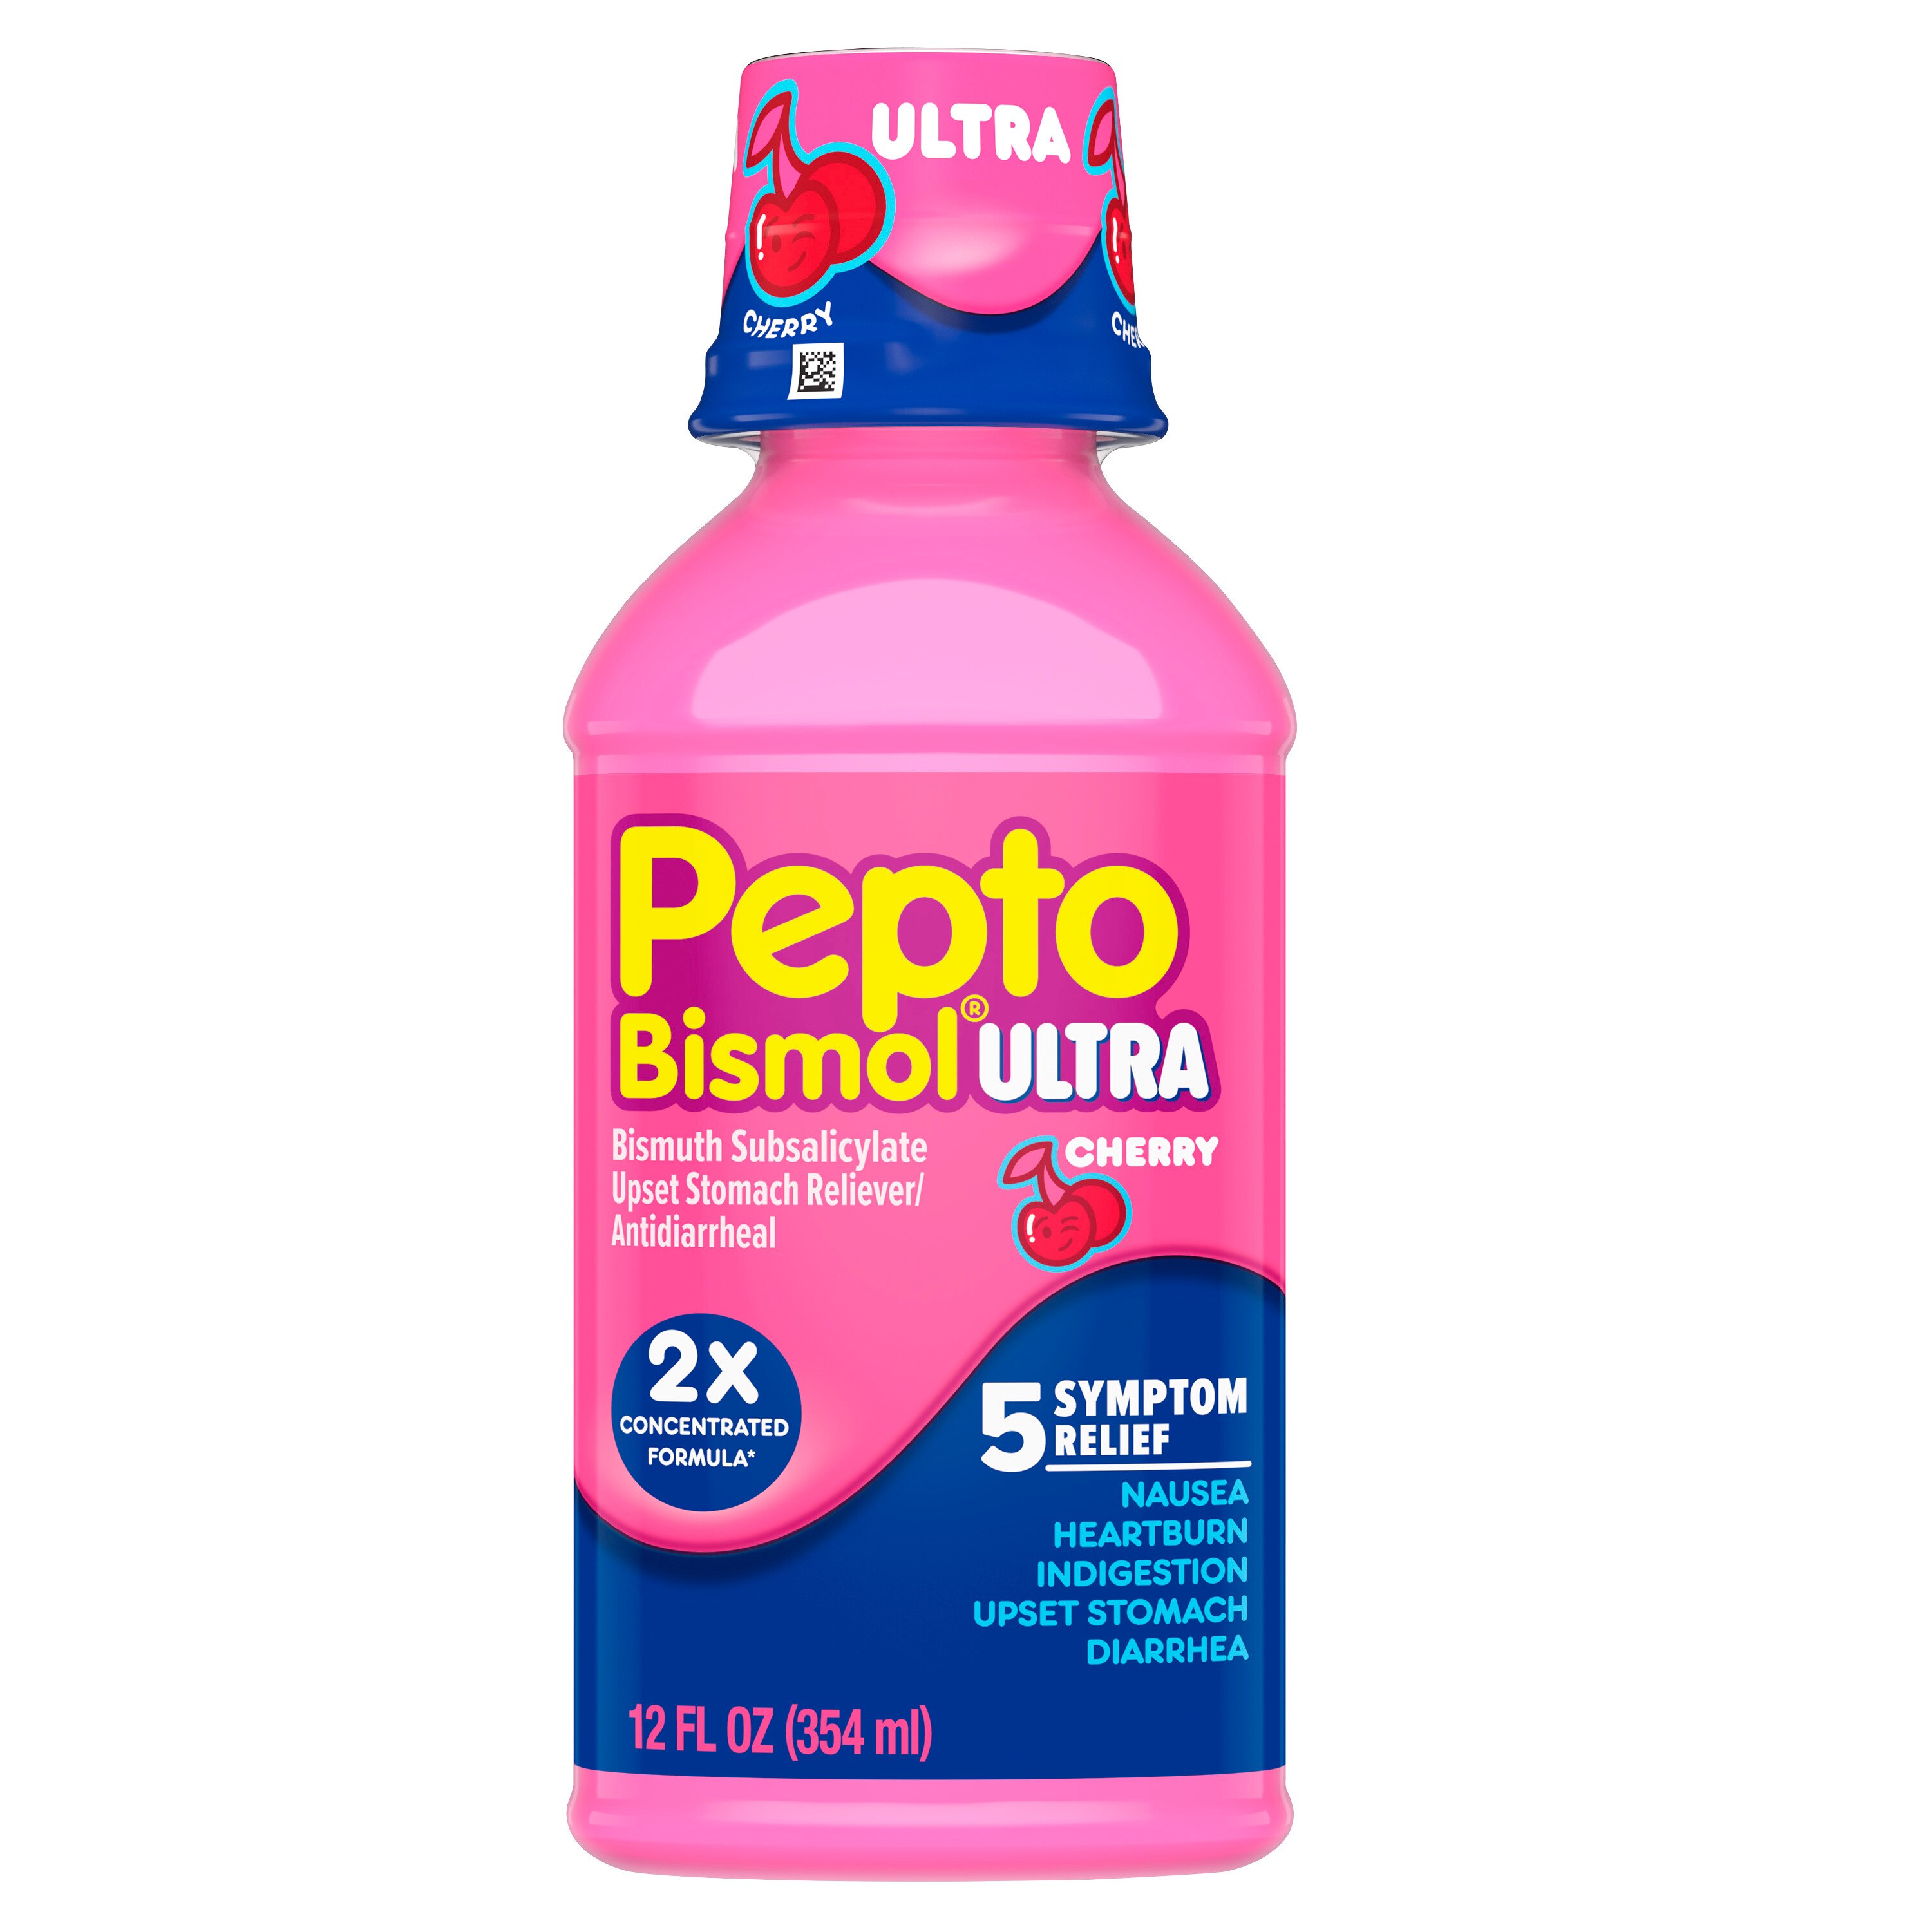 Pepto Bismol Liquid Ultra for Nausea, Heartburn, Indigestion, Upset Stomach, and Diarrhea Relief, Cherry Flavor, 12 OZ